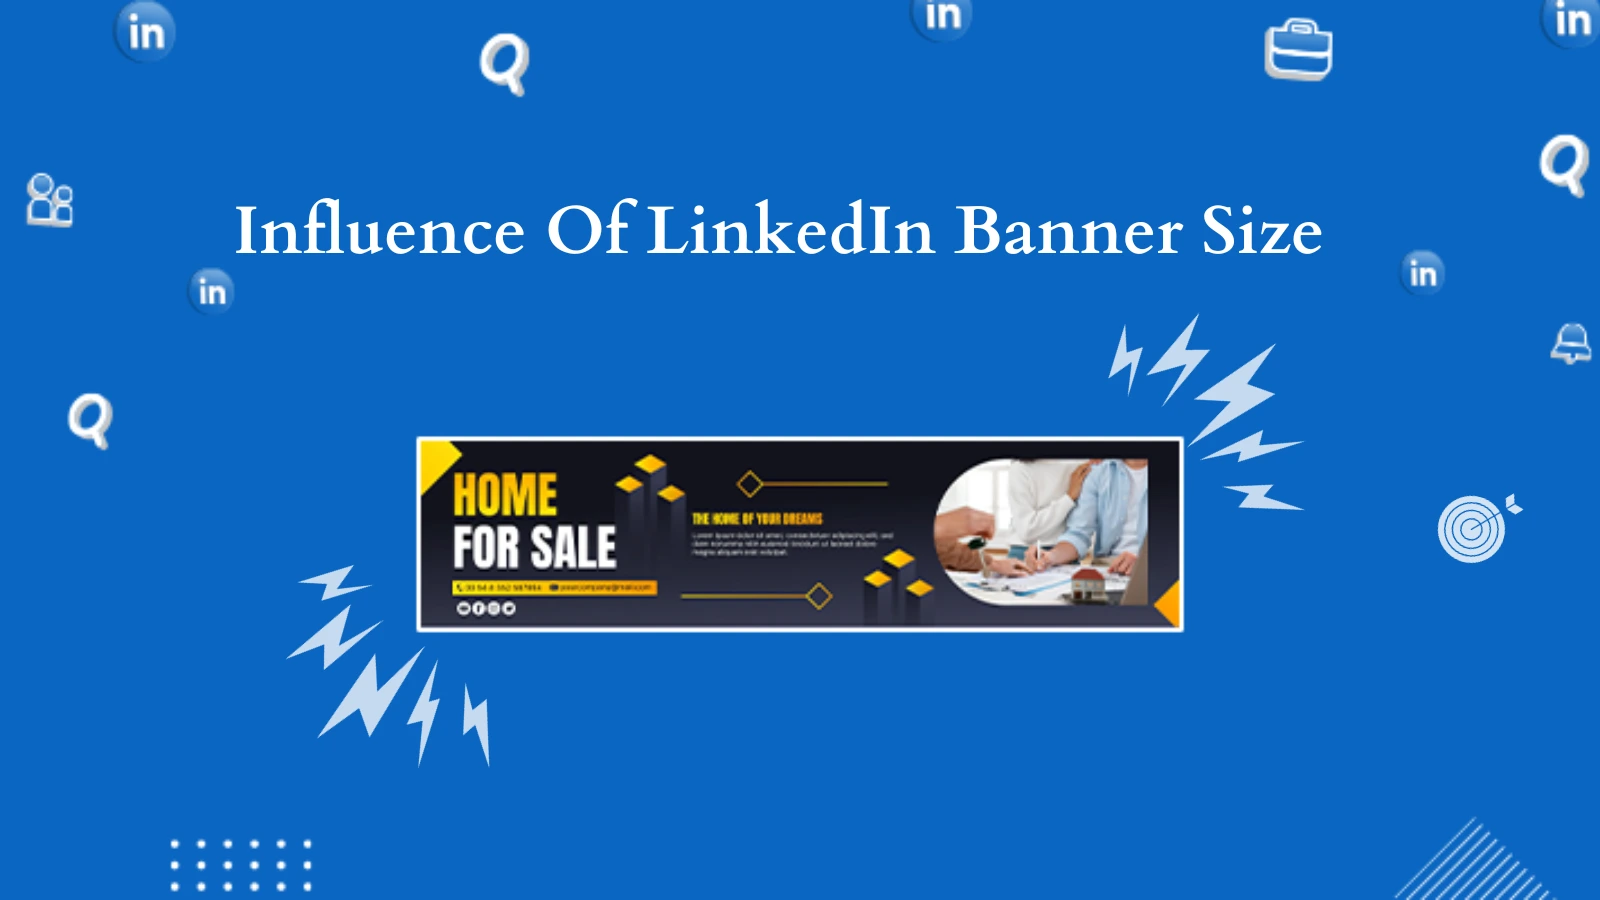 linkedin-banner-size-influence